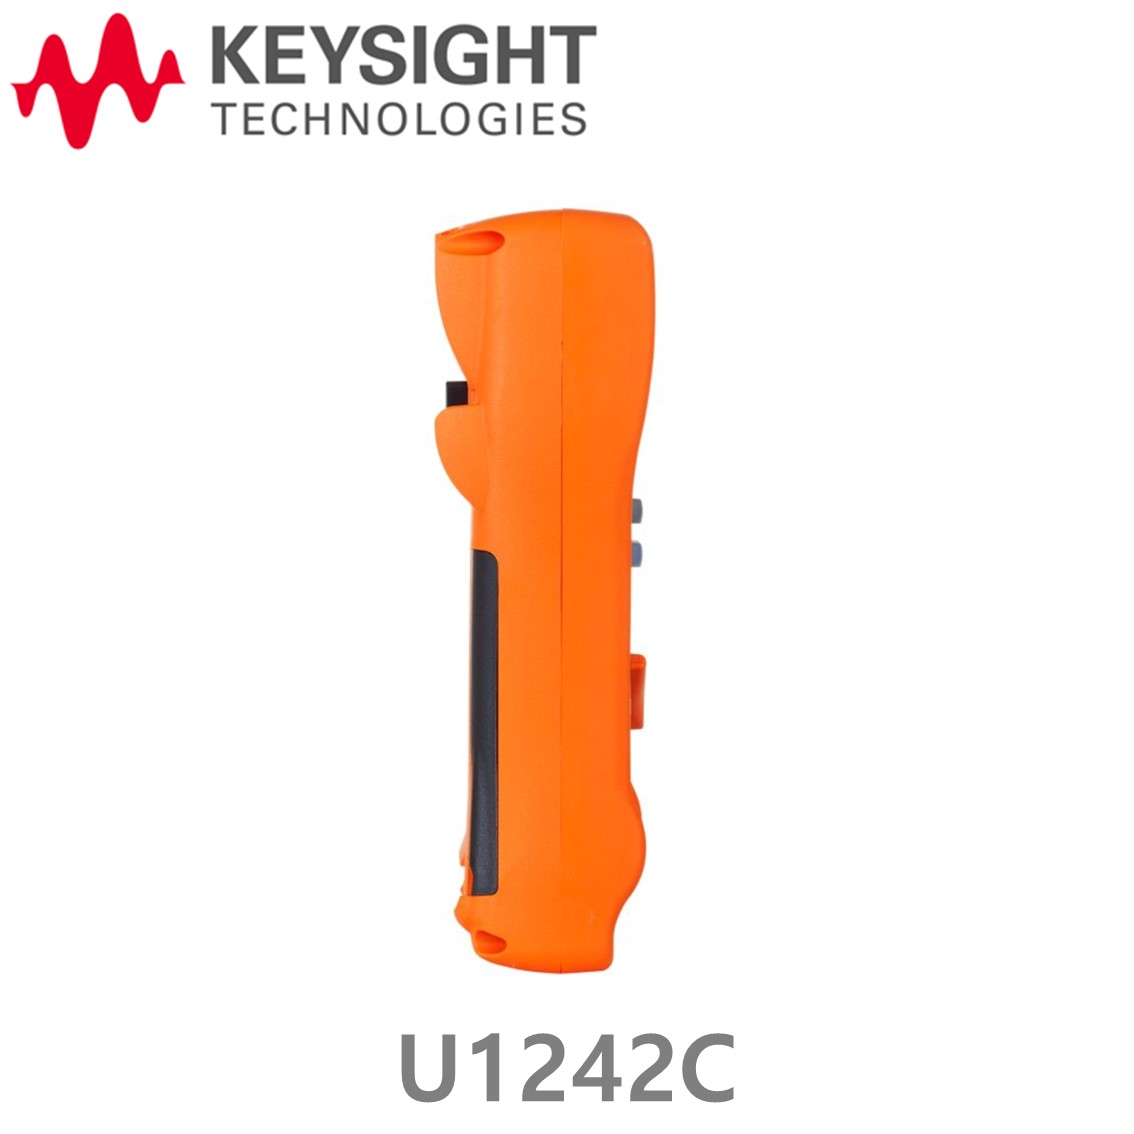 [ KEYSIGHT U1242C ] 키사이트 4디지트 핸드형 디지털 멀티미터, 방수,방진 IP67